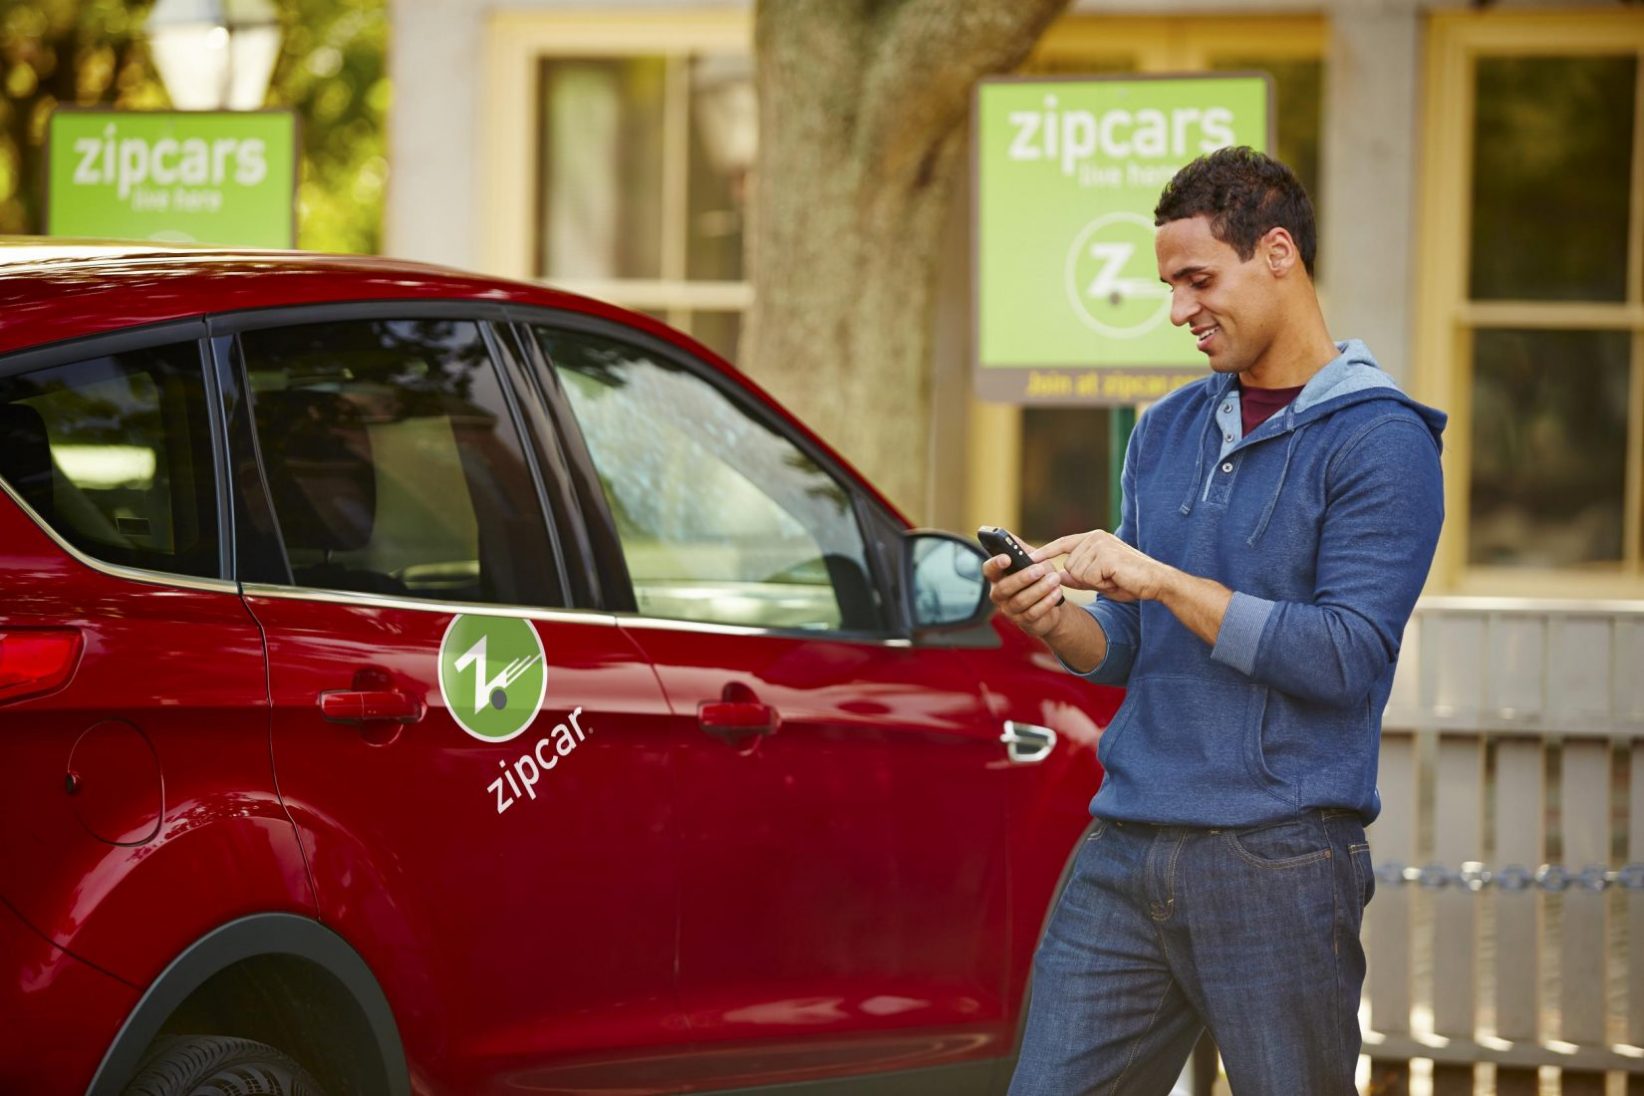 zipcar-consumer-pod-ford-focus